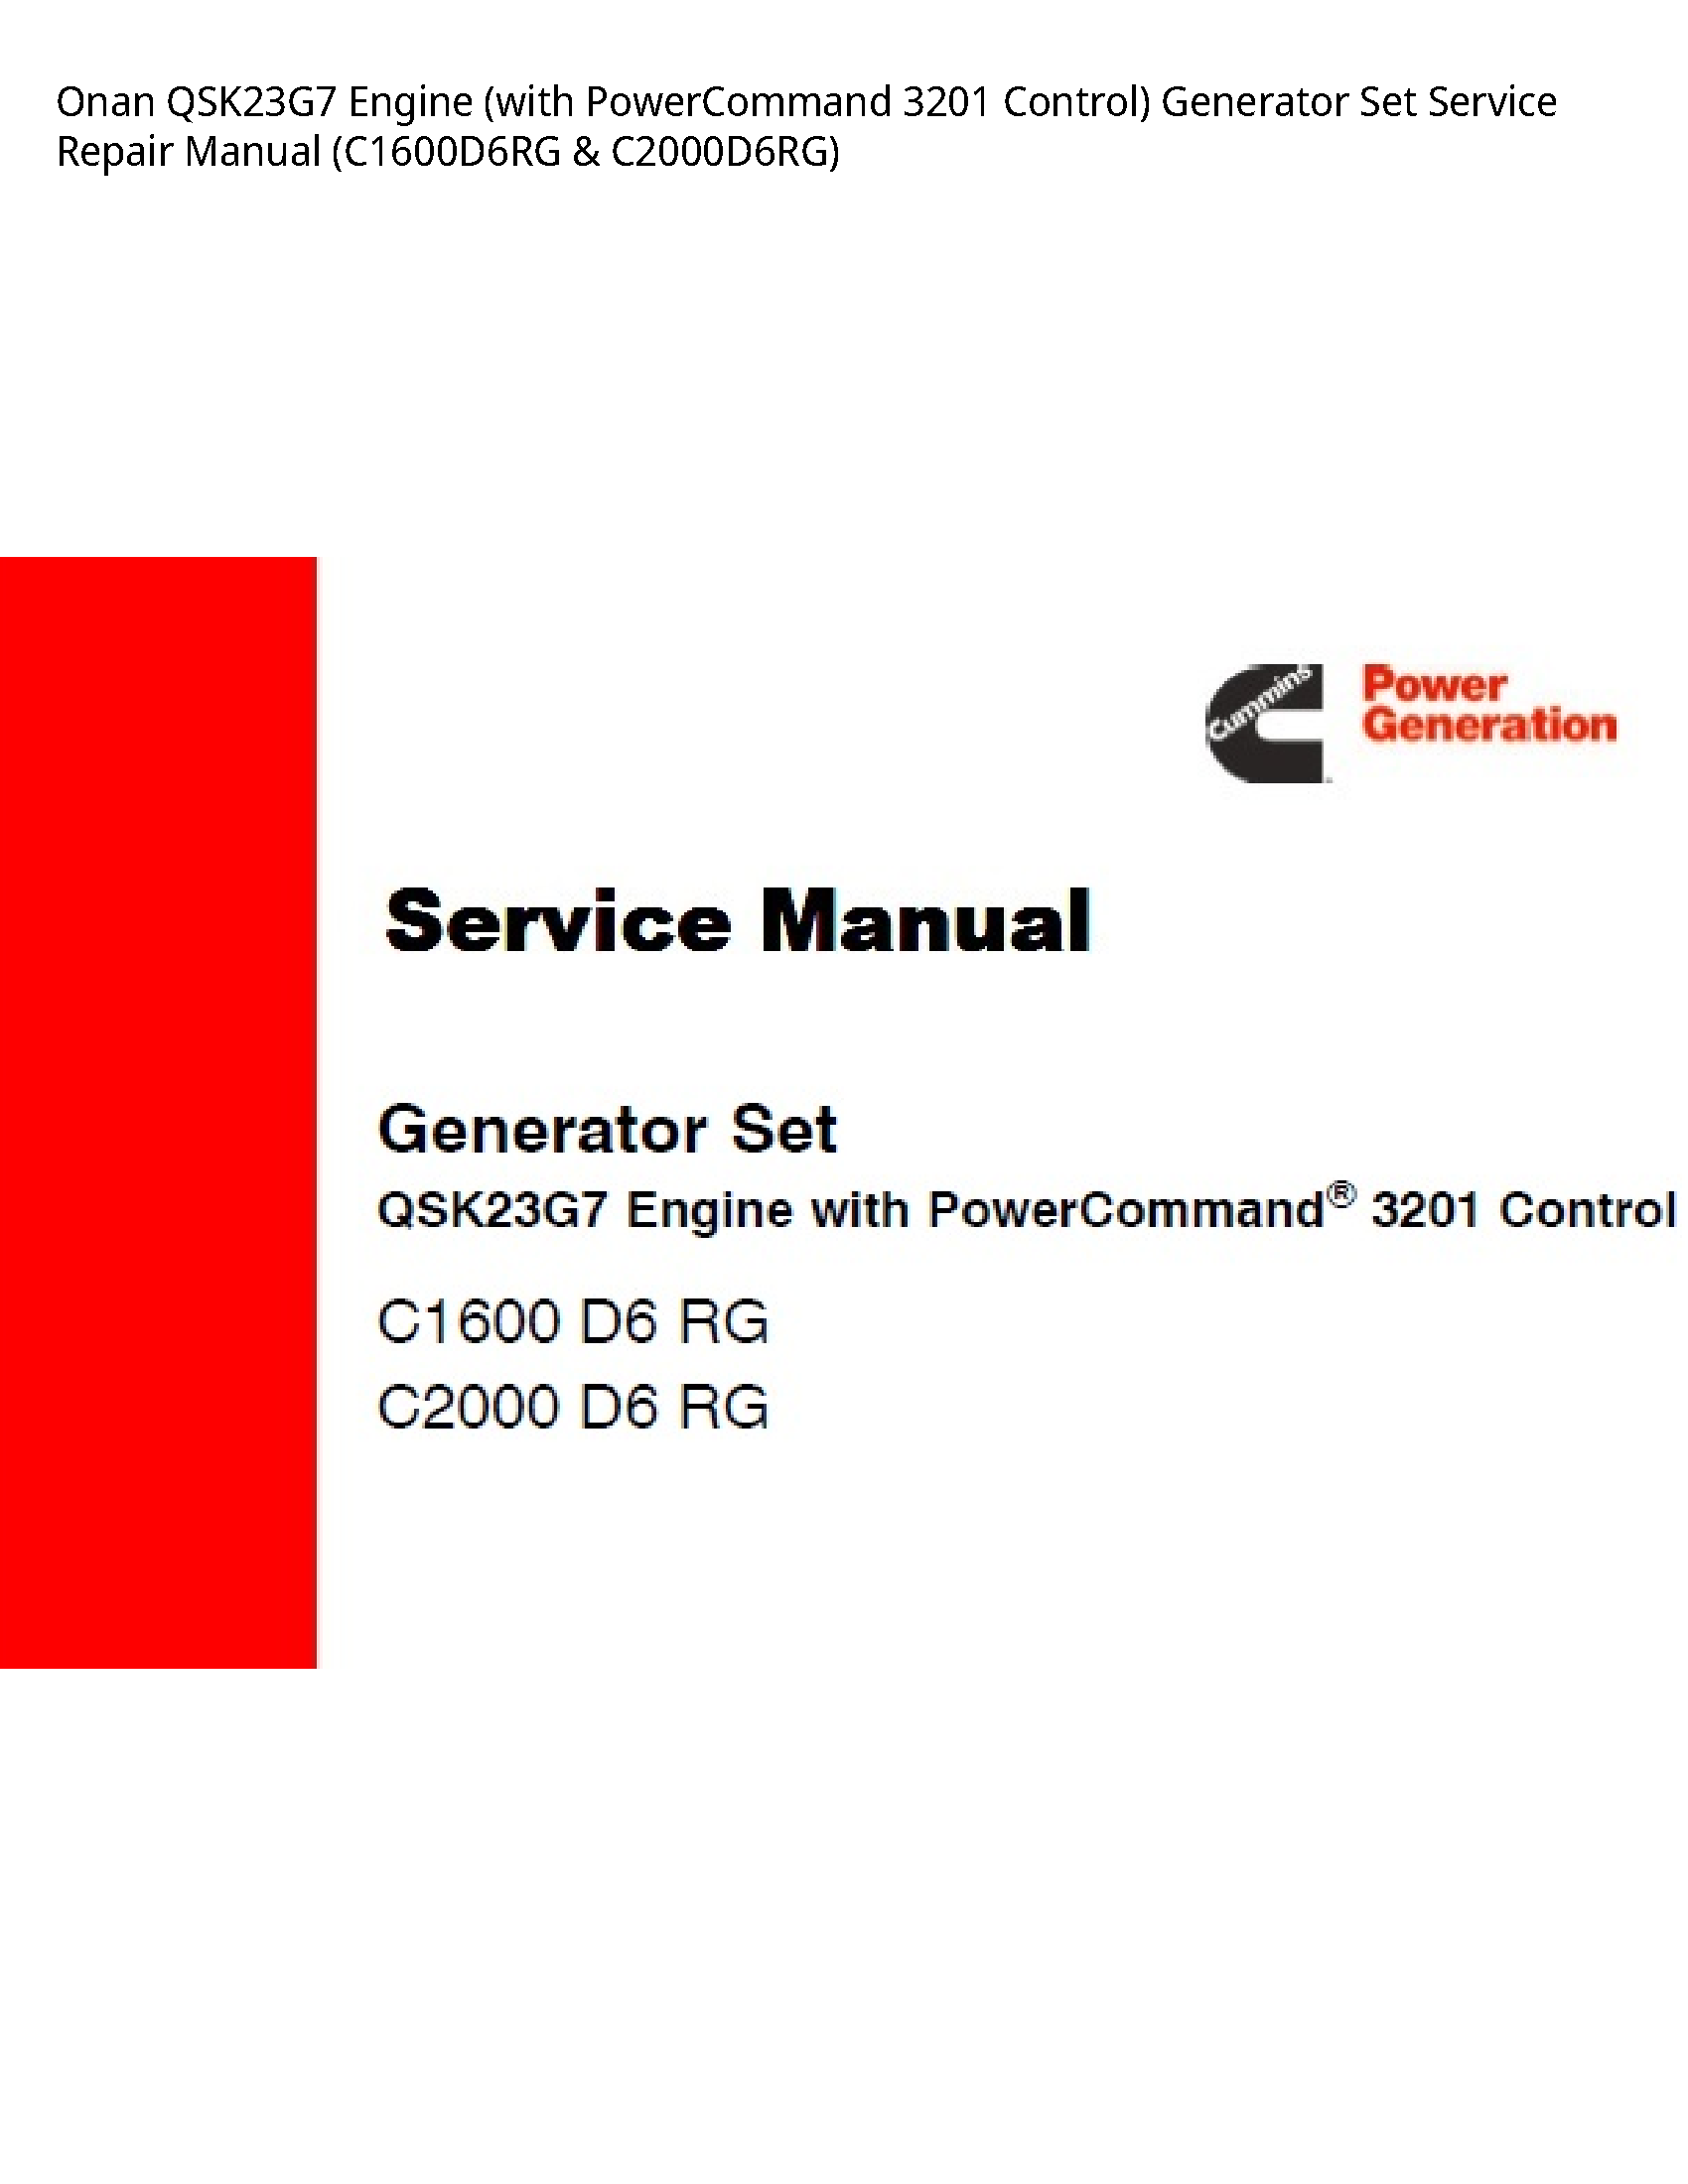 Onan QSK23G7 Engine (with PowerCommand Control) Generator Set manual